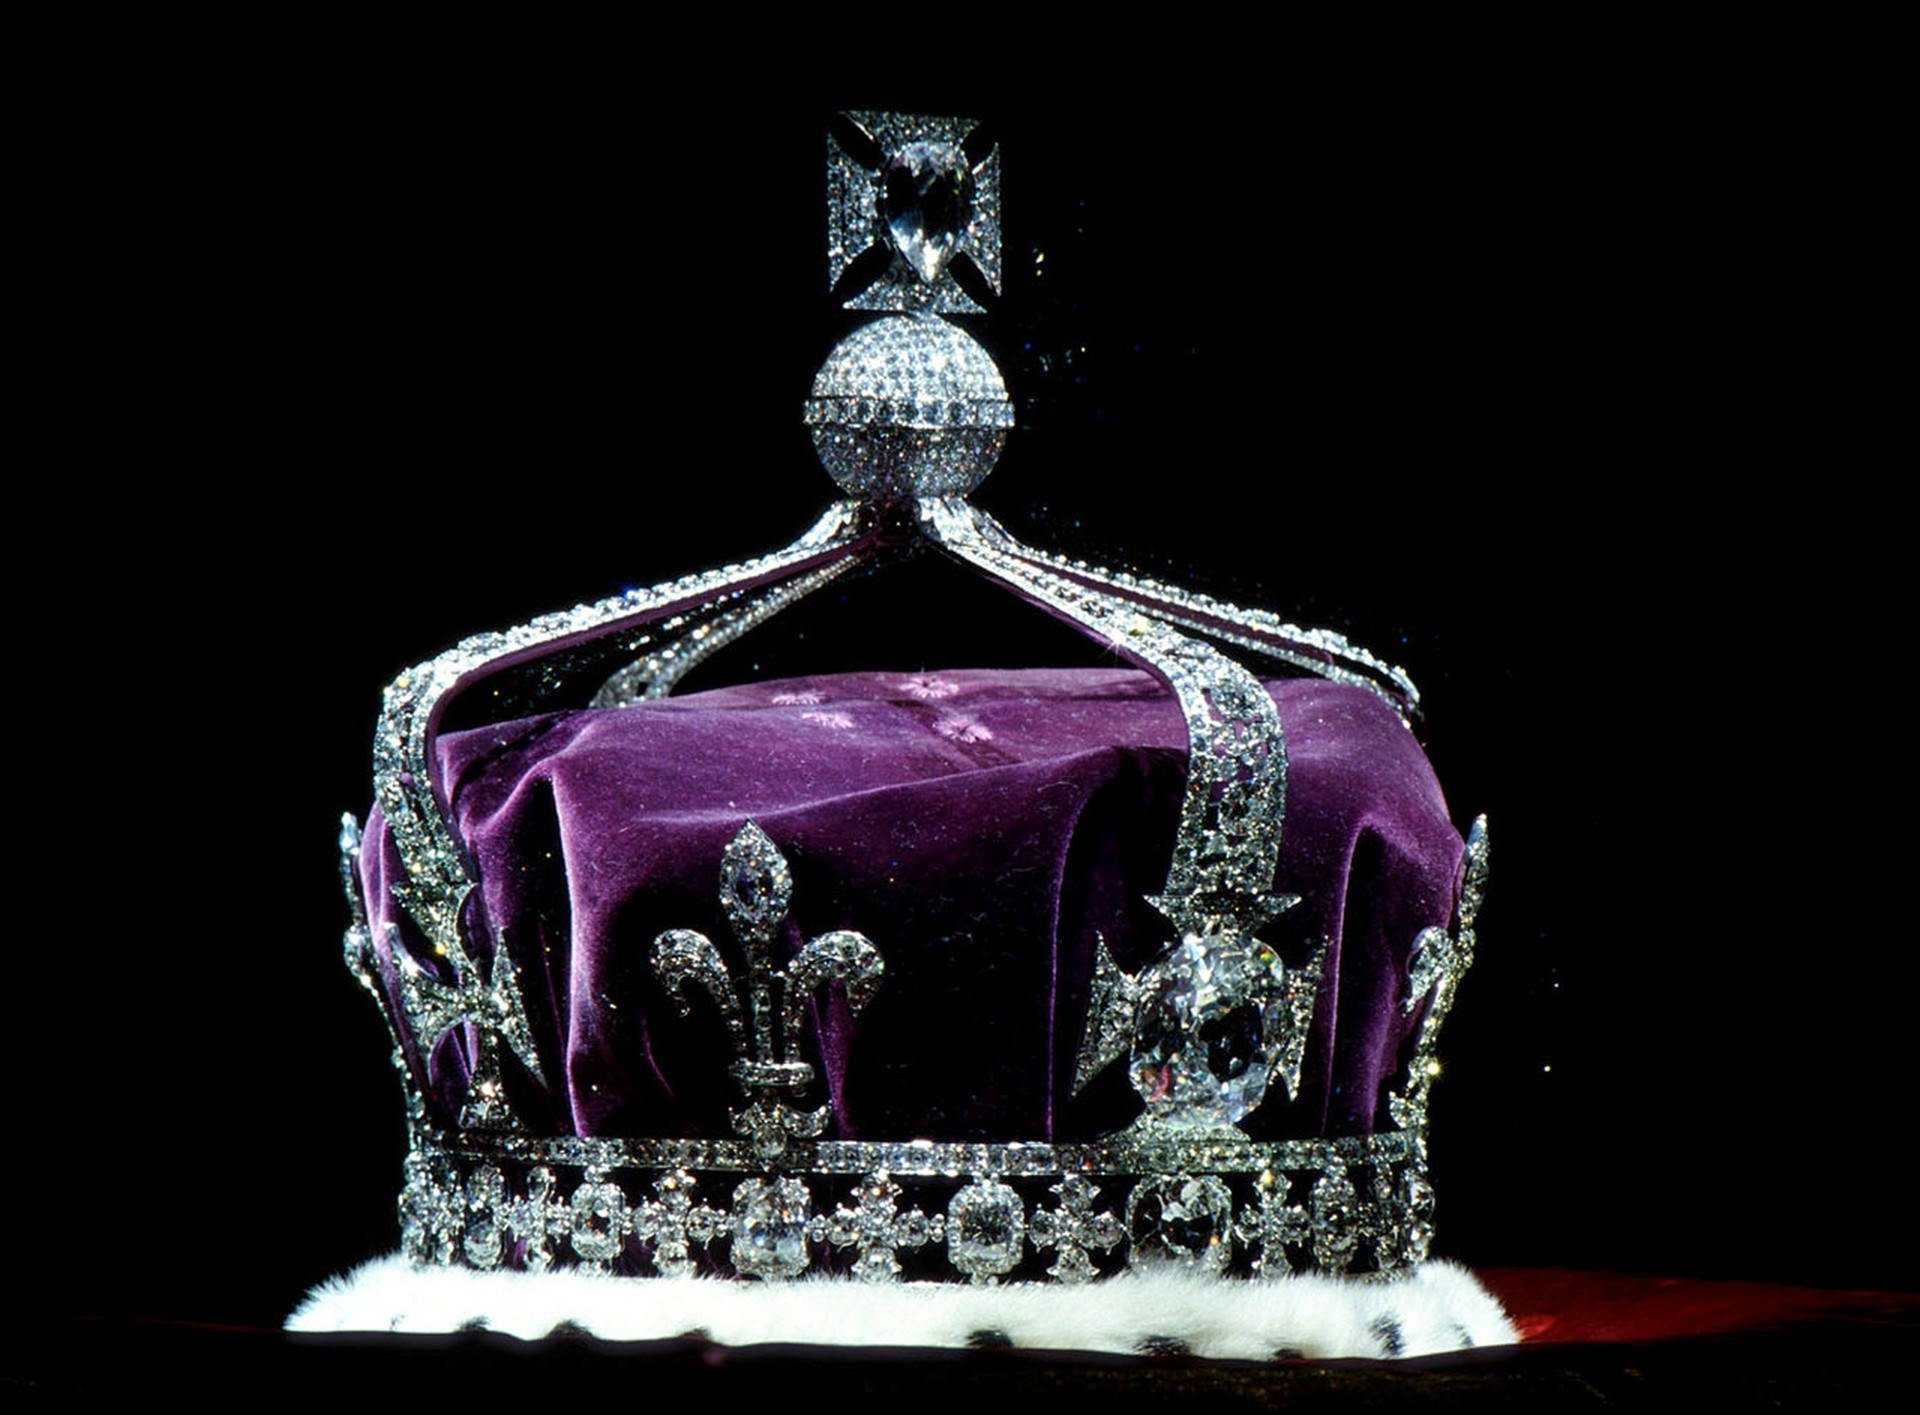 Shine like a diamond with this stunning crown of jeweled purple diamonds Wallpaper